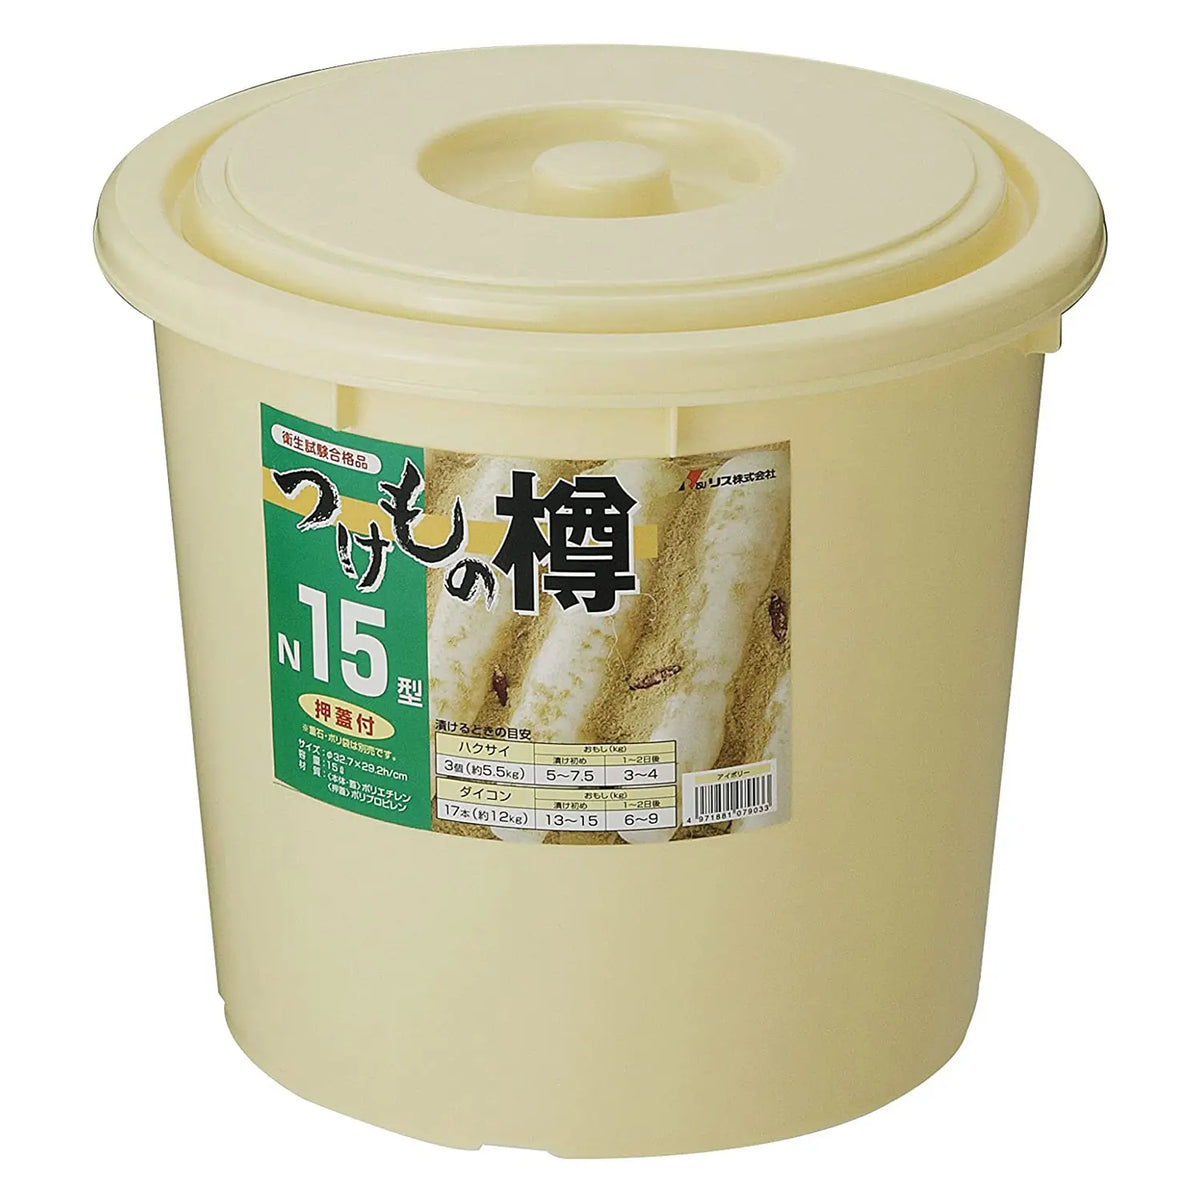 RISU Polyethylene Nukazuke Pickle Storage Jar